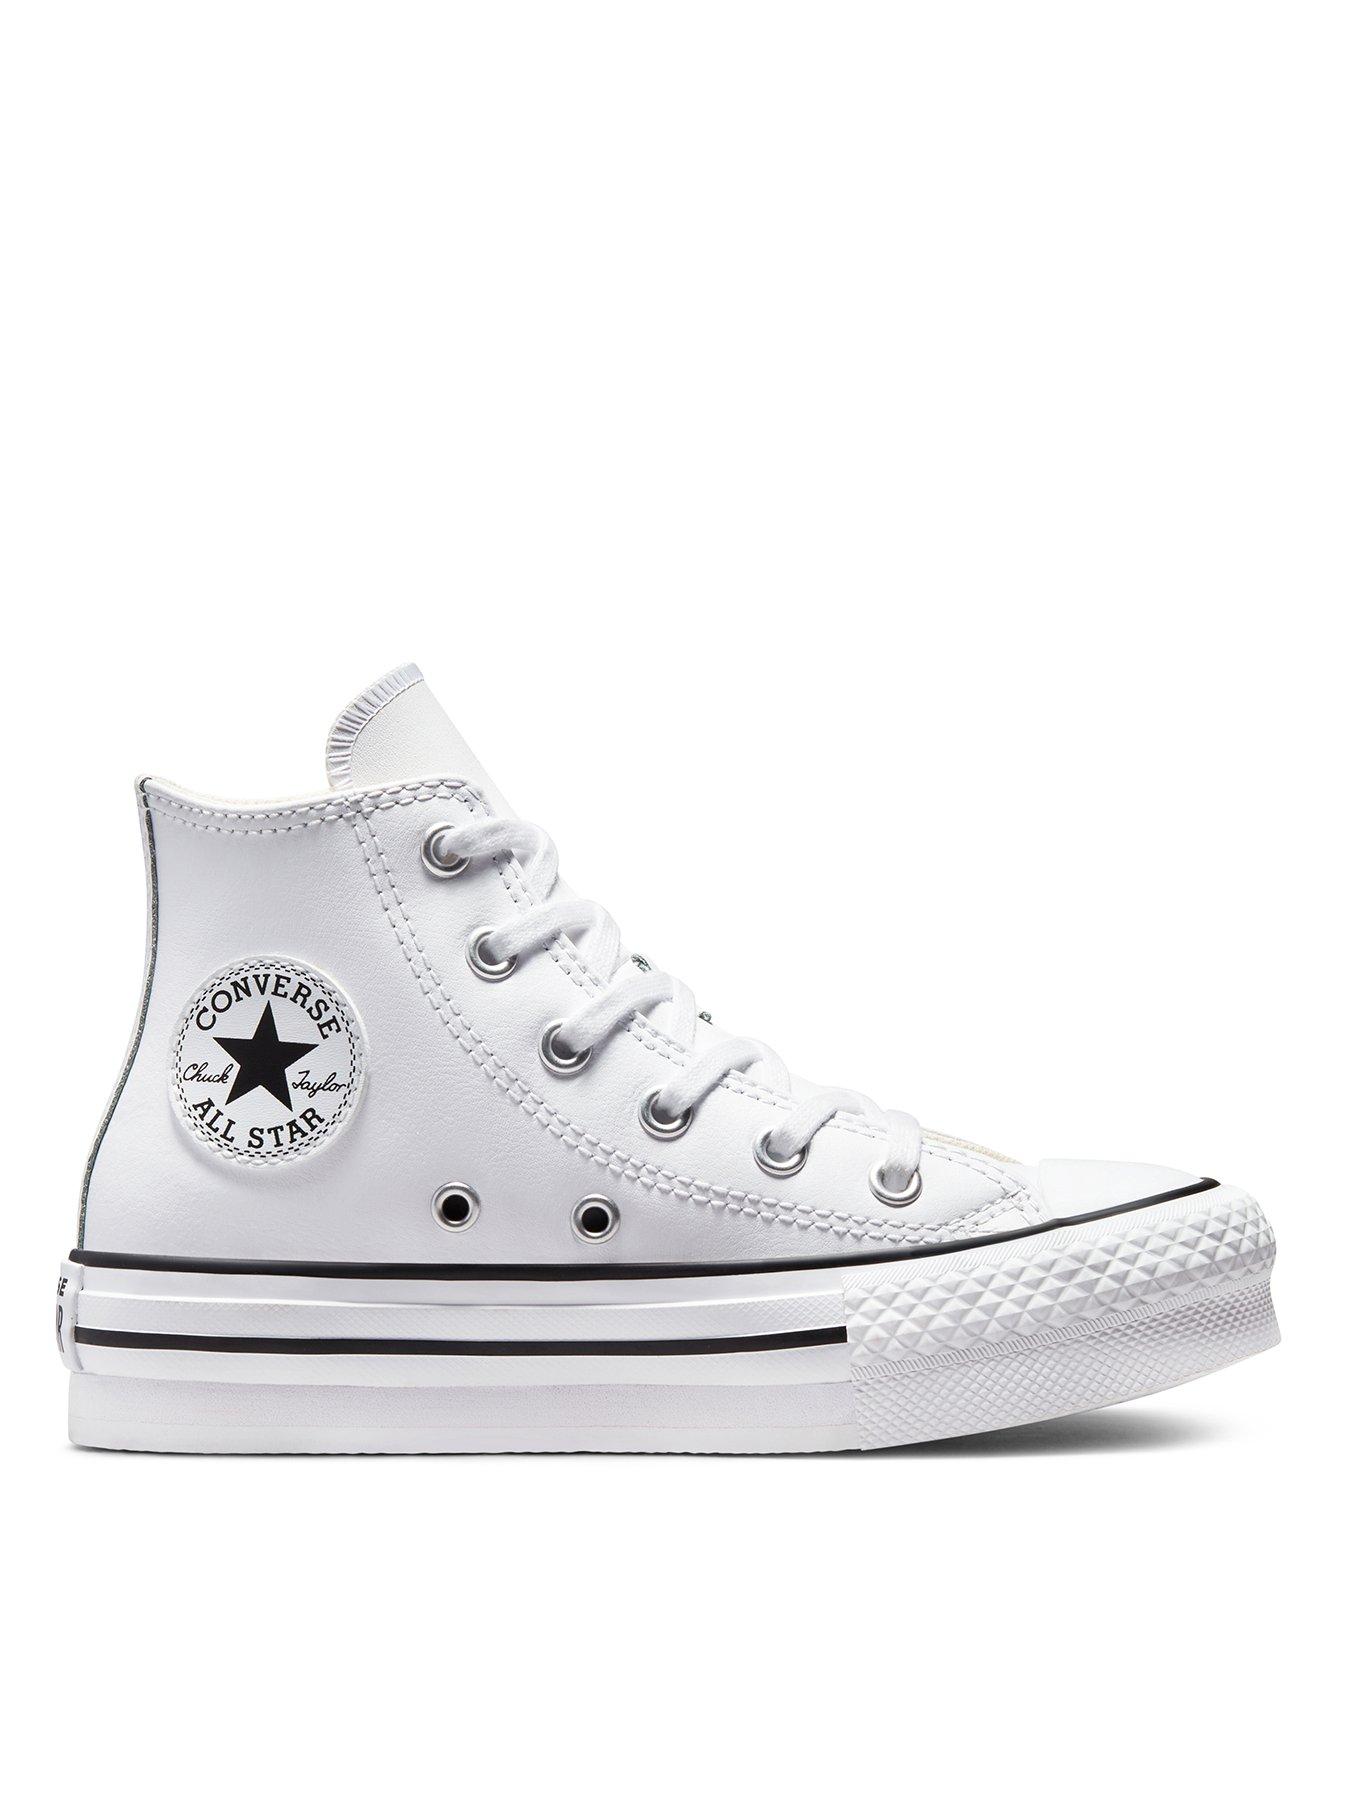 Converse Kids Girls Leather EVA Lift Hi Top Trainers - White, White, Size 12